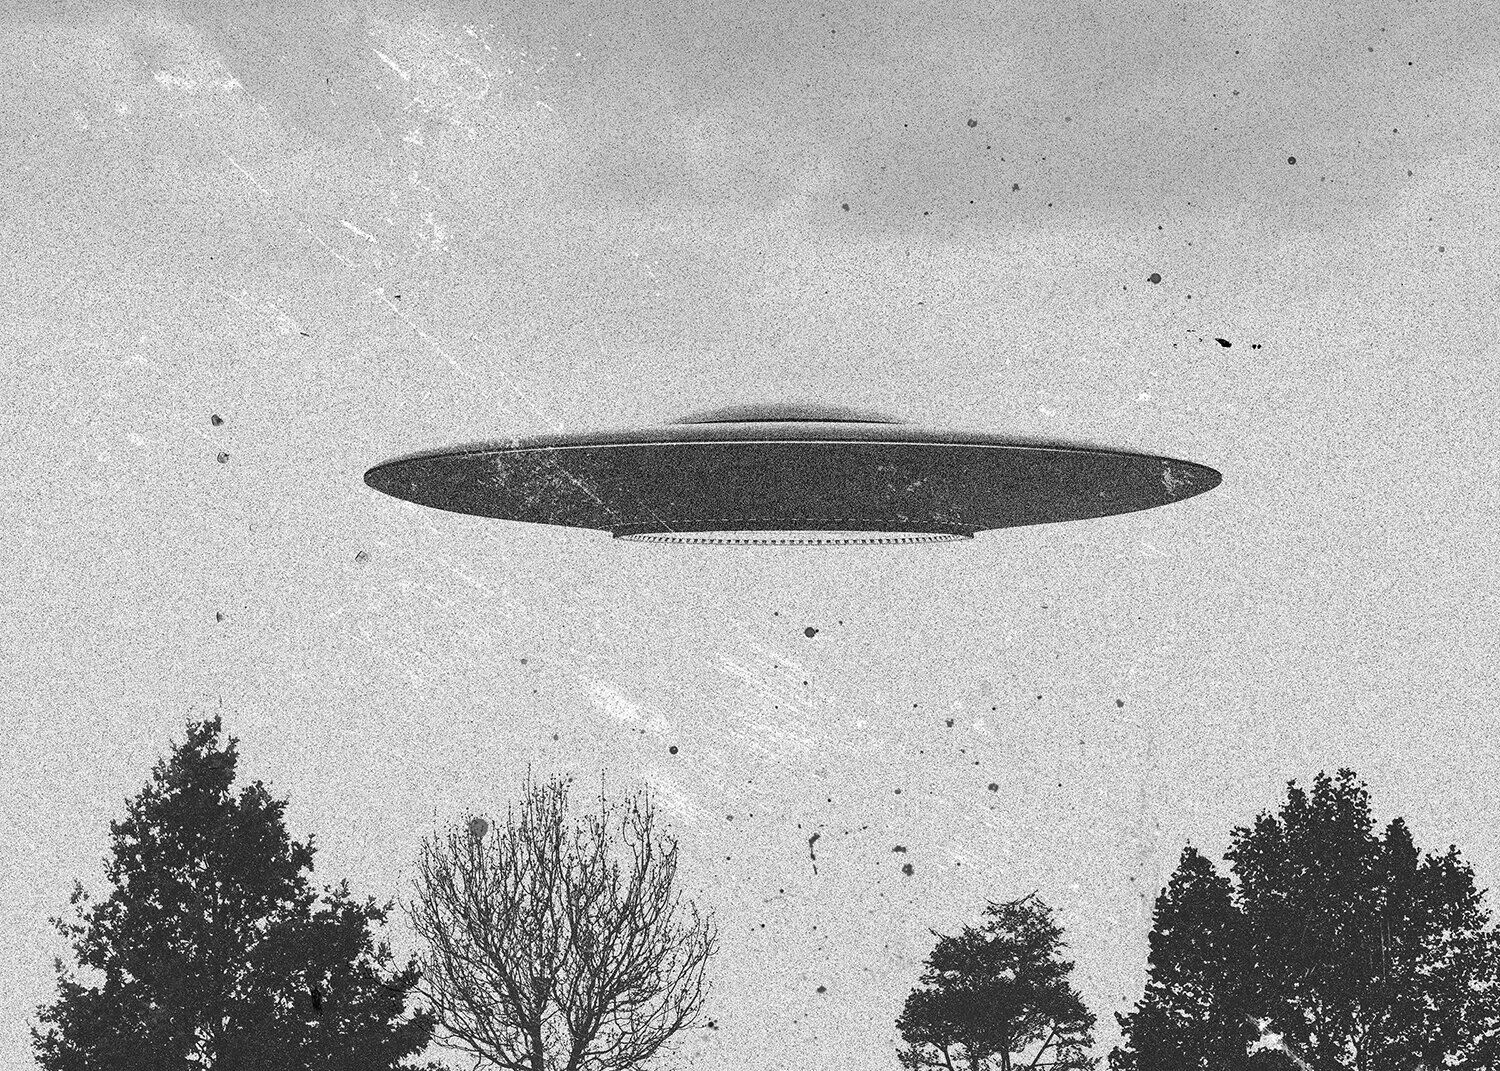 recent ufo sightings in nj